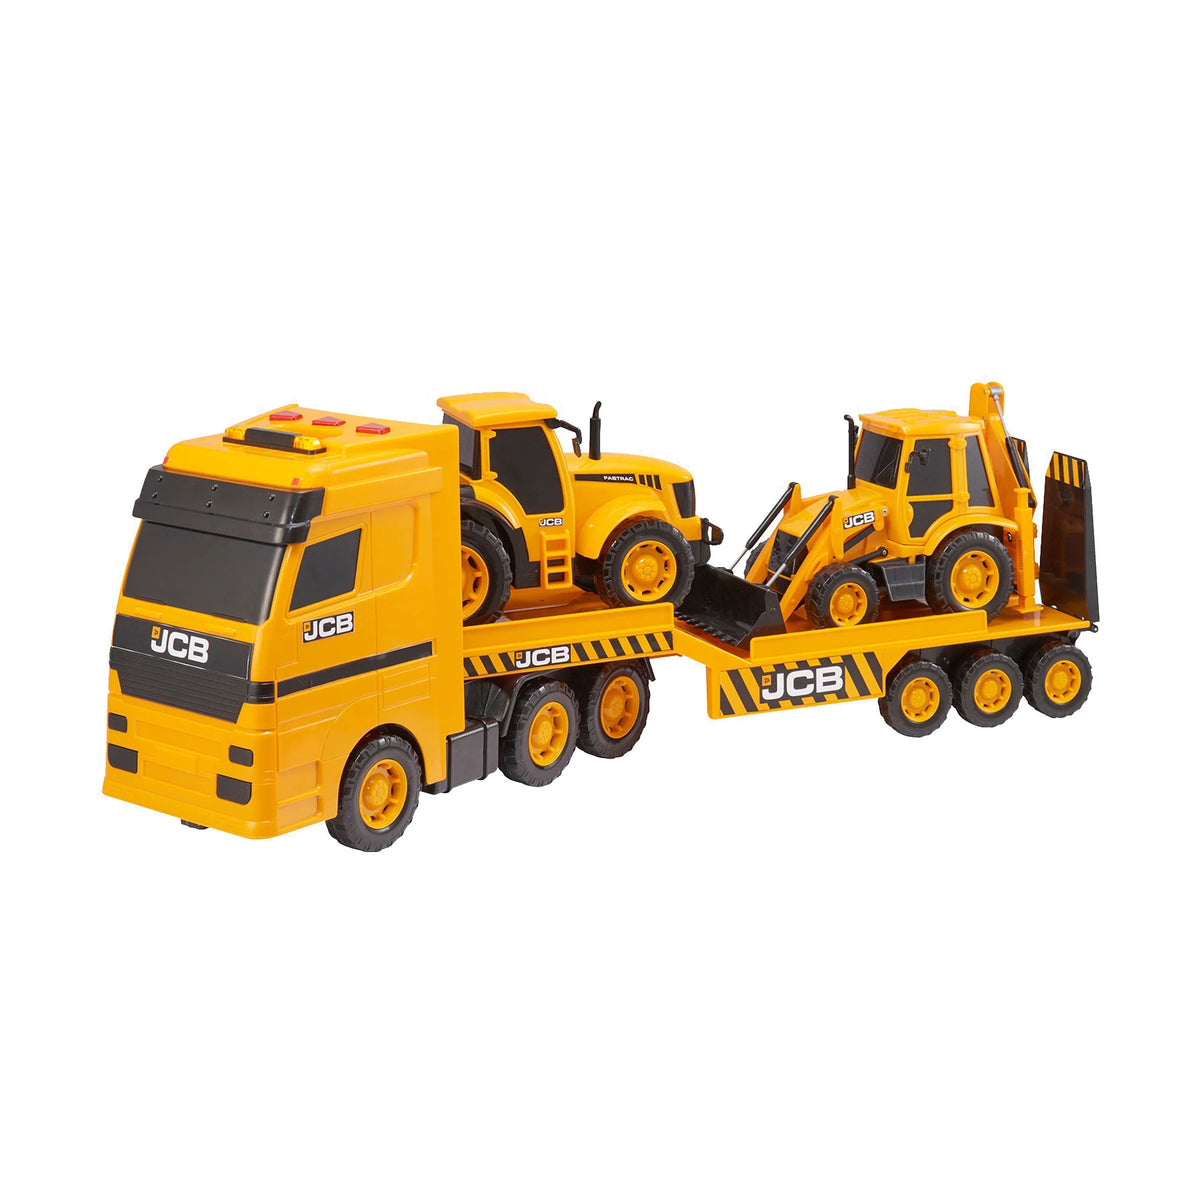 Teamsterz JCB Heavy Loader Toy Transporter Truck